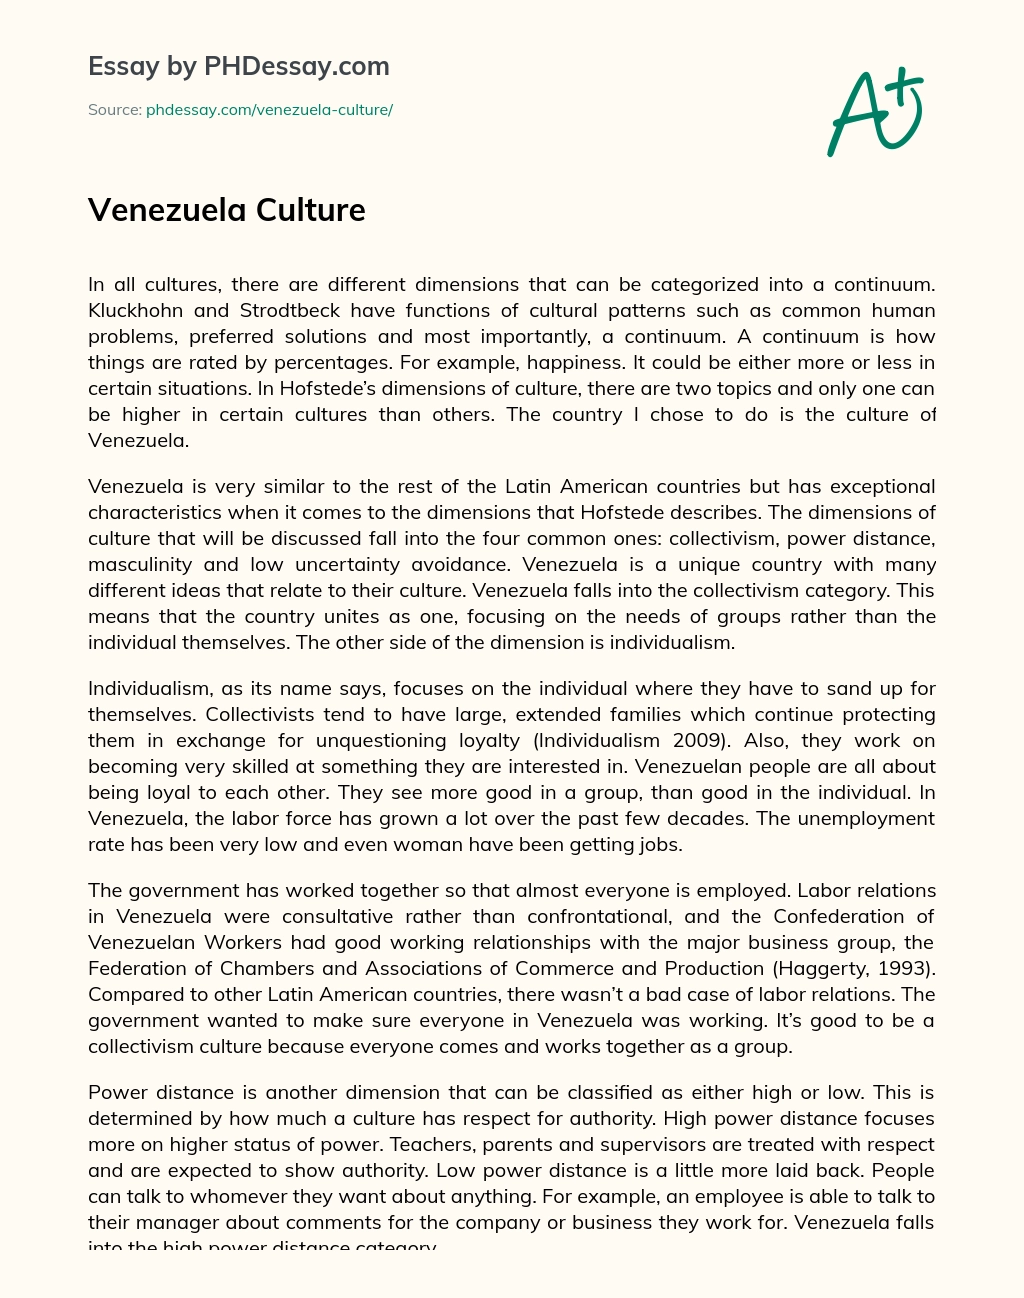 Venezuela Culture essay